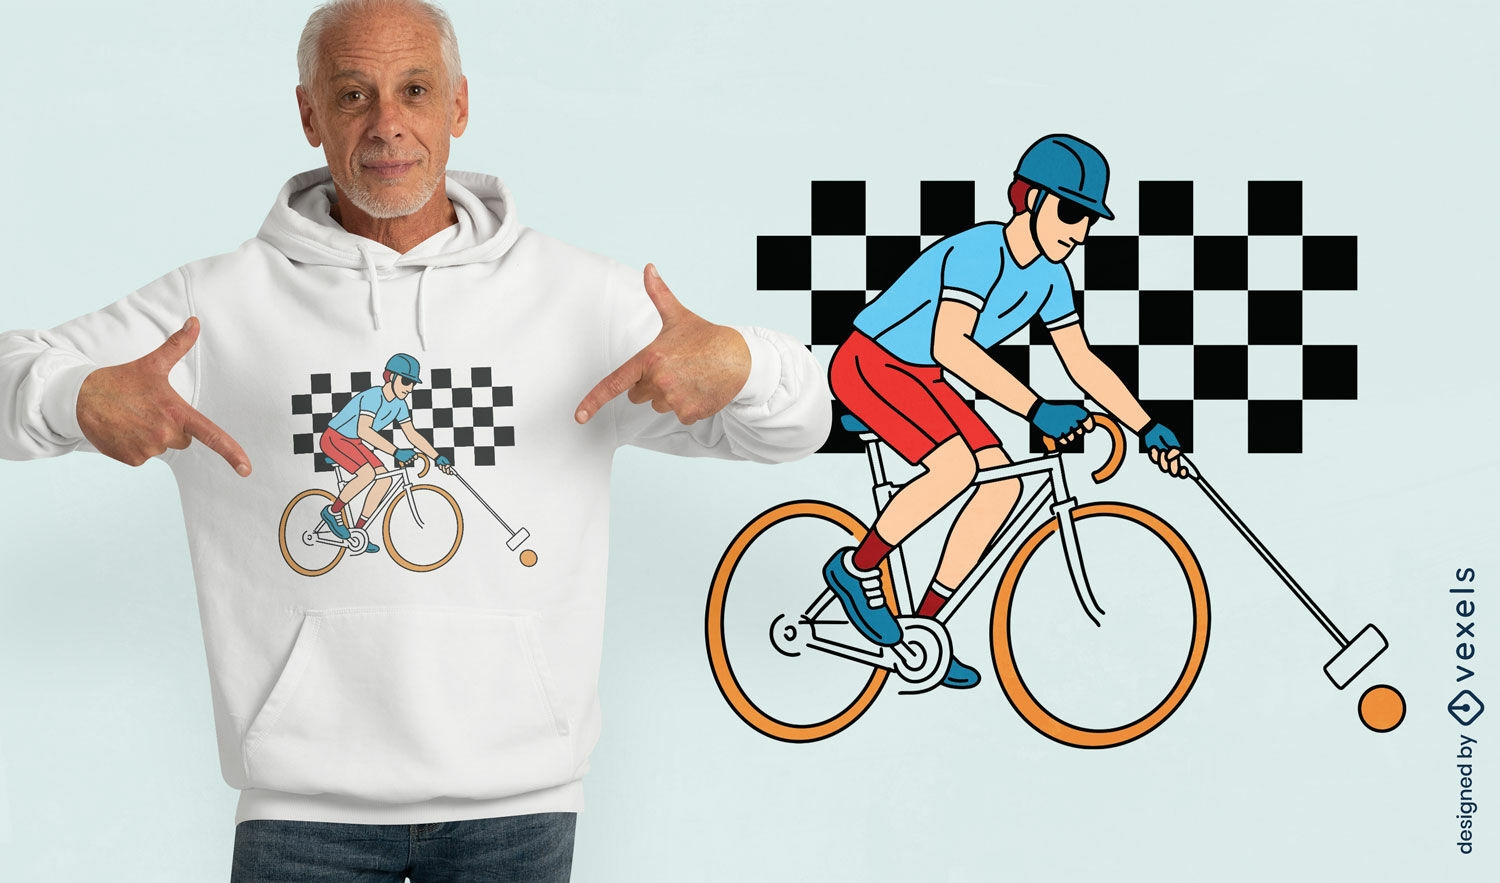 Bike polo race t-shirt design